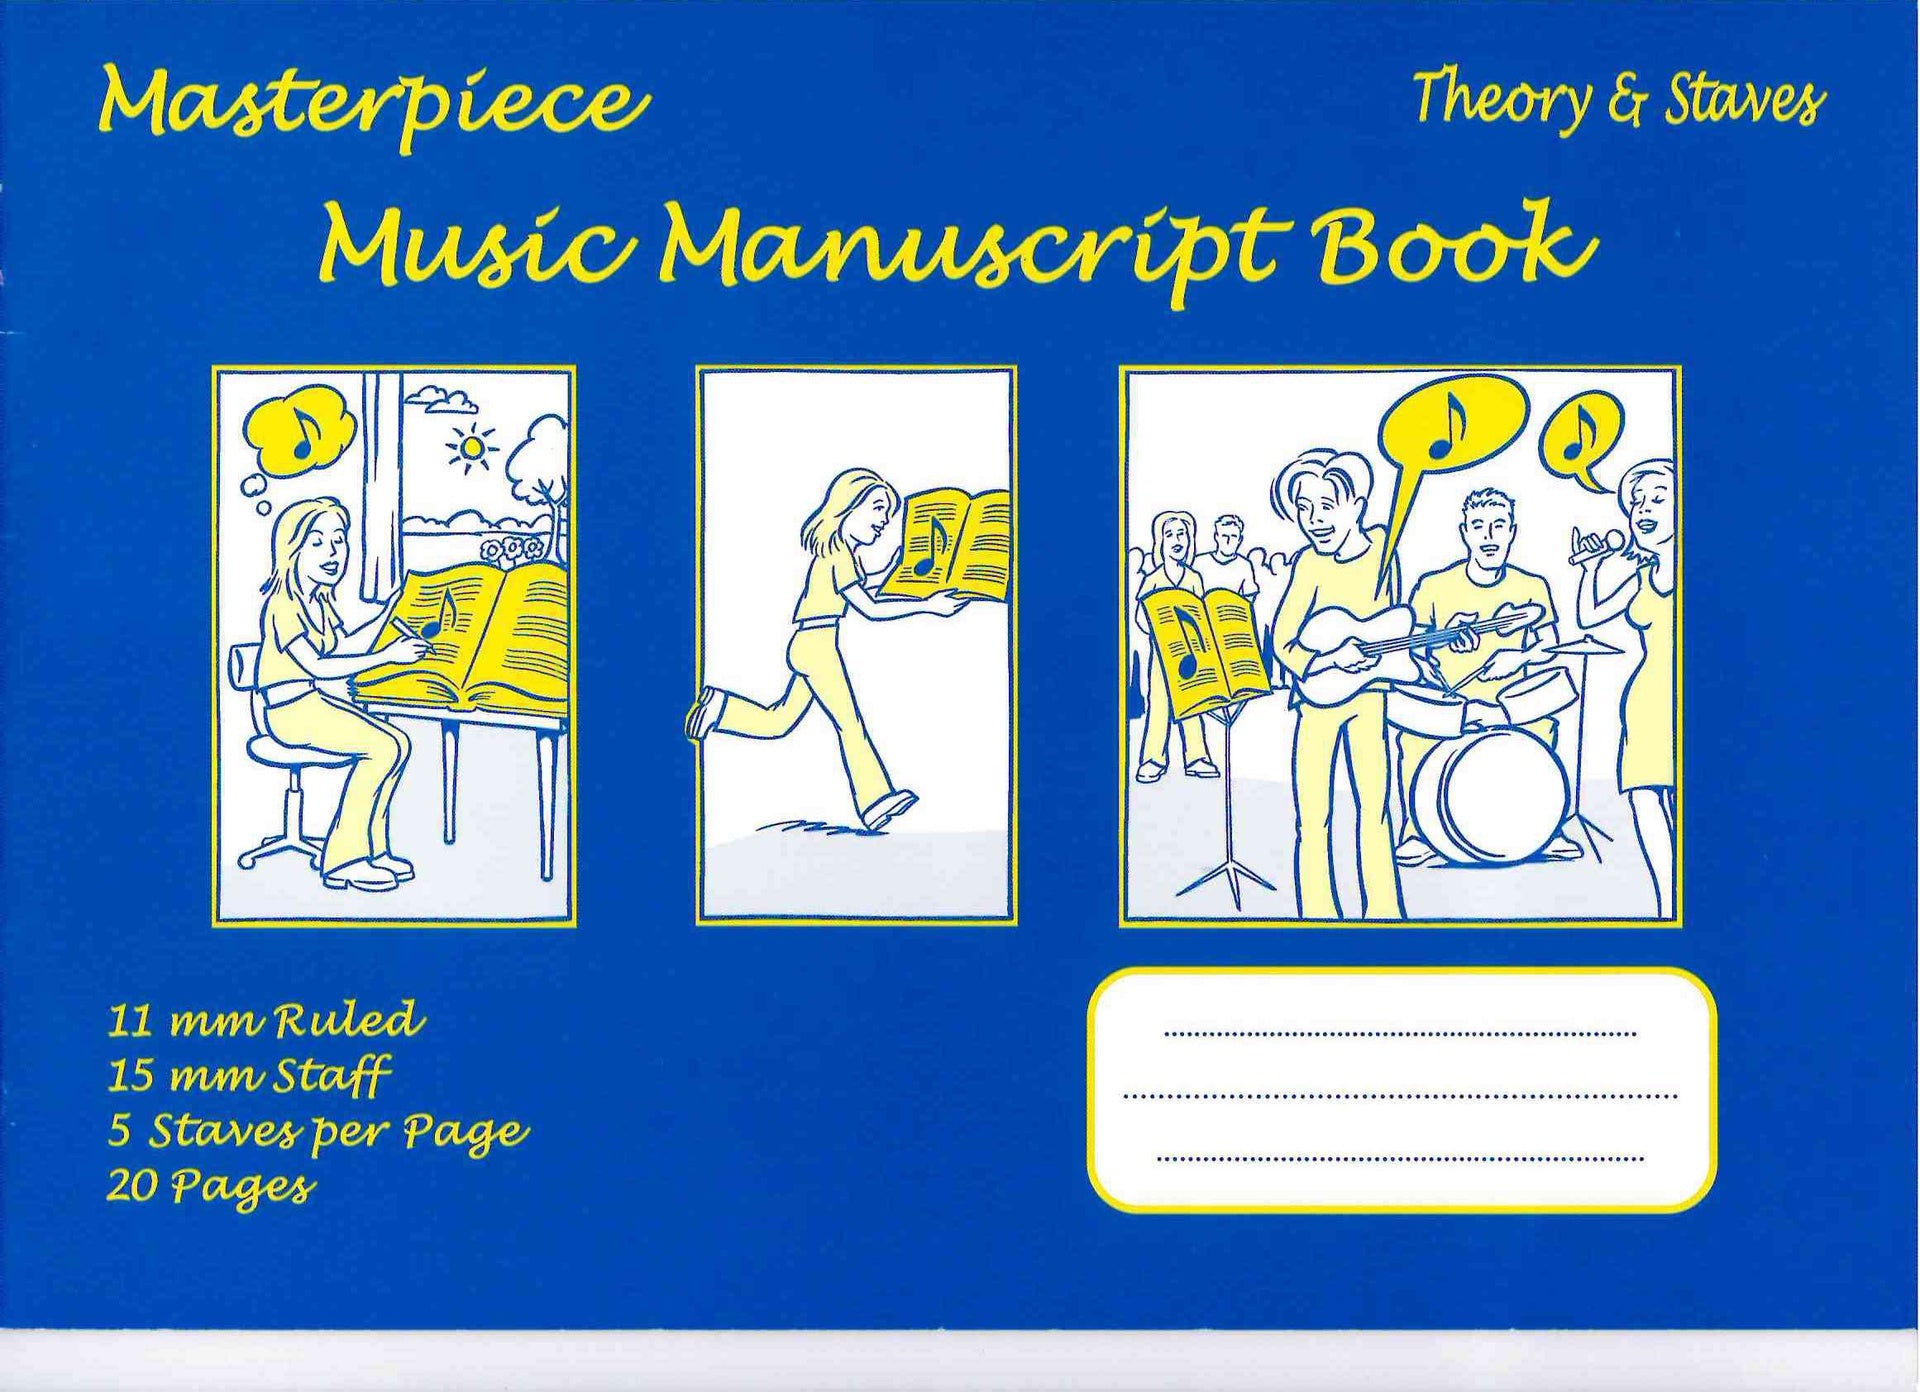 Masterpiece Music Manuscript Book - Music & Writing Book Masterpiece MMMB